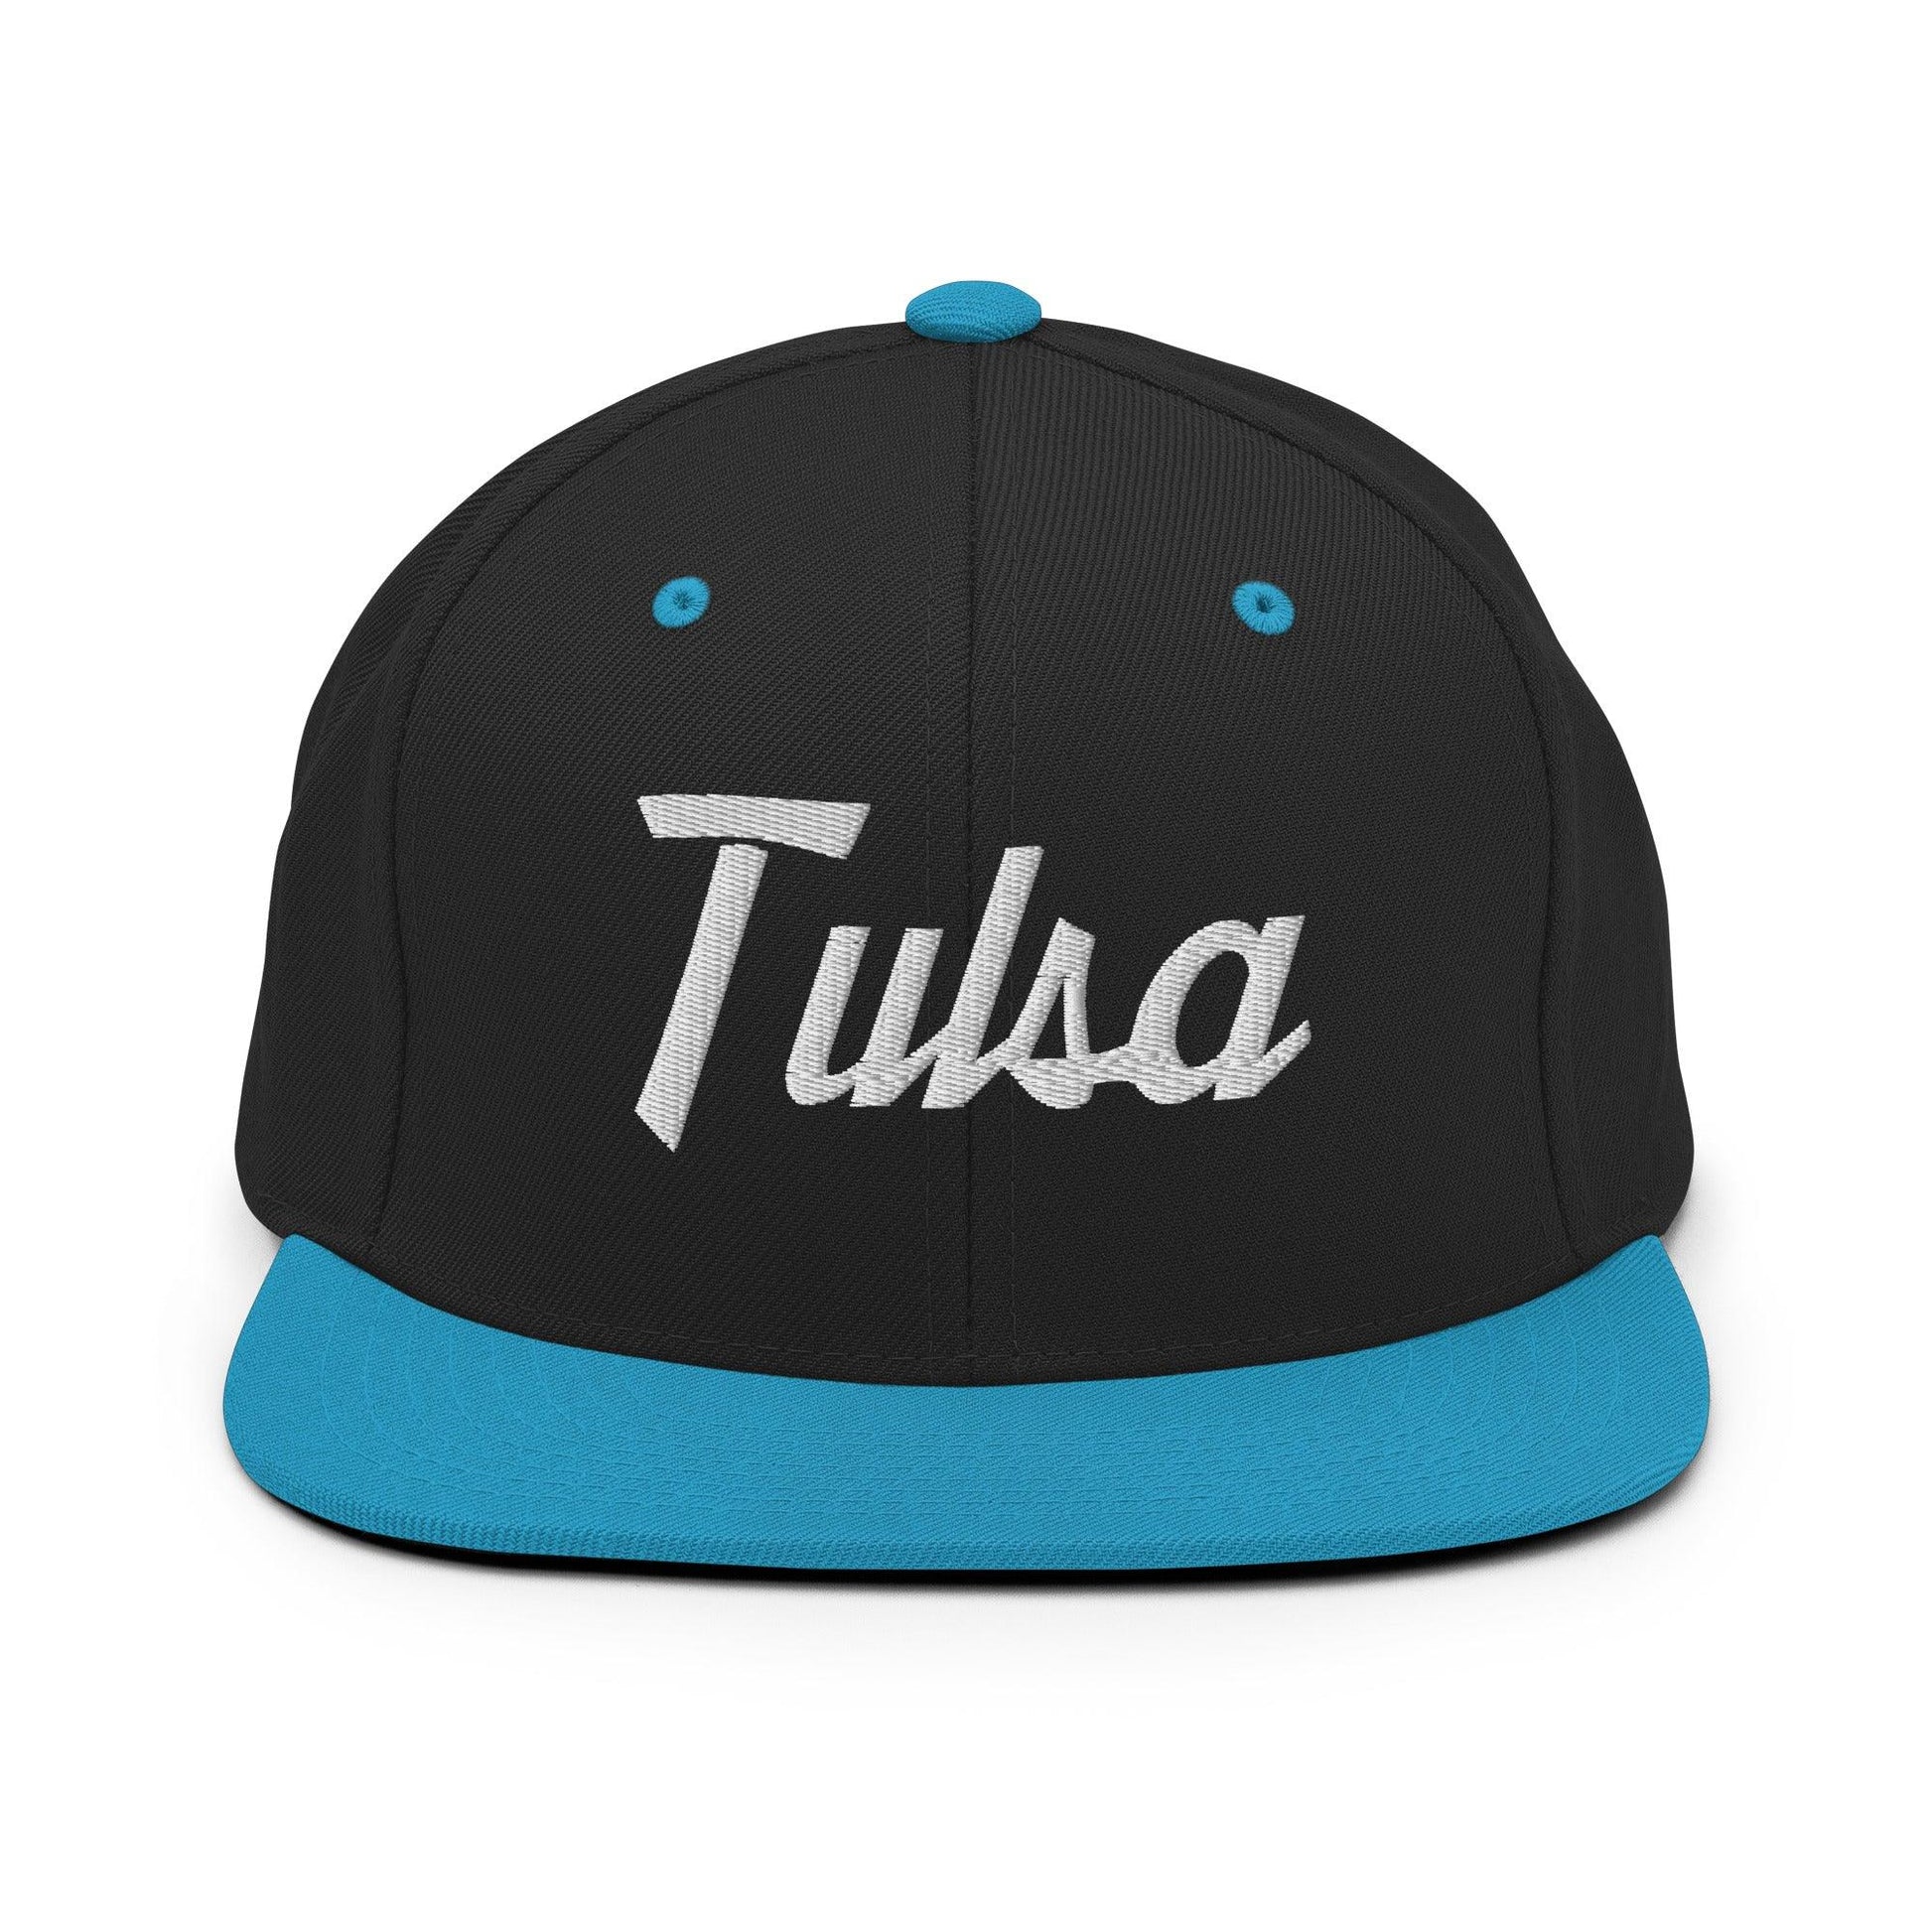 Tulsa Script Snapback Hat Black/ Teal